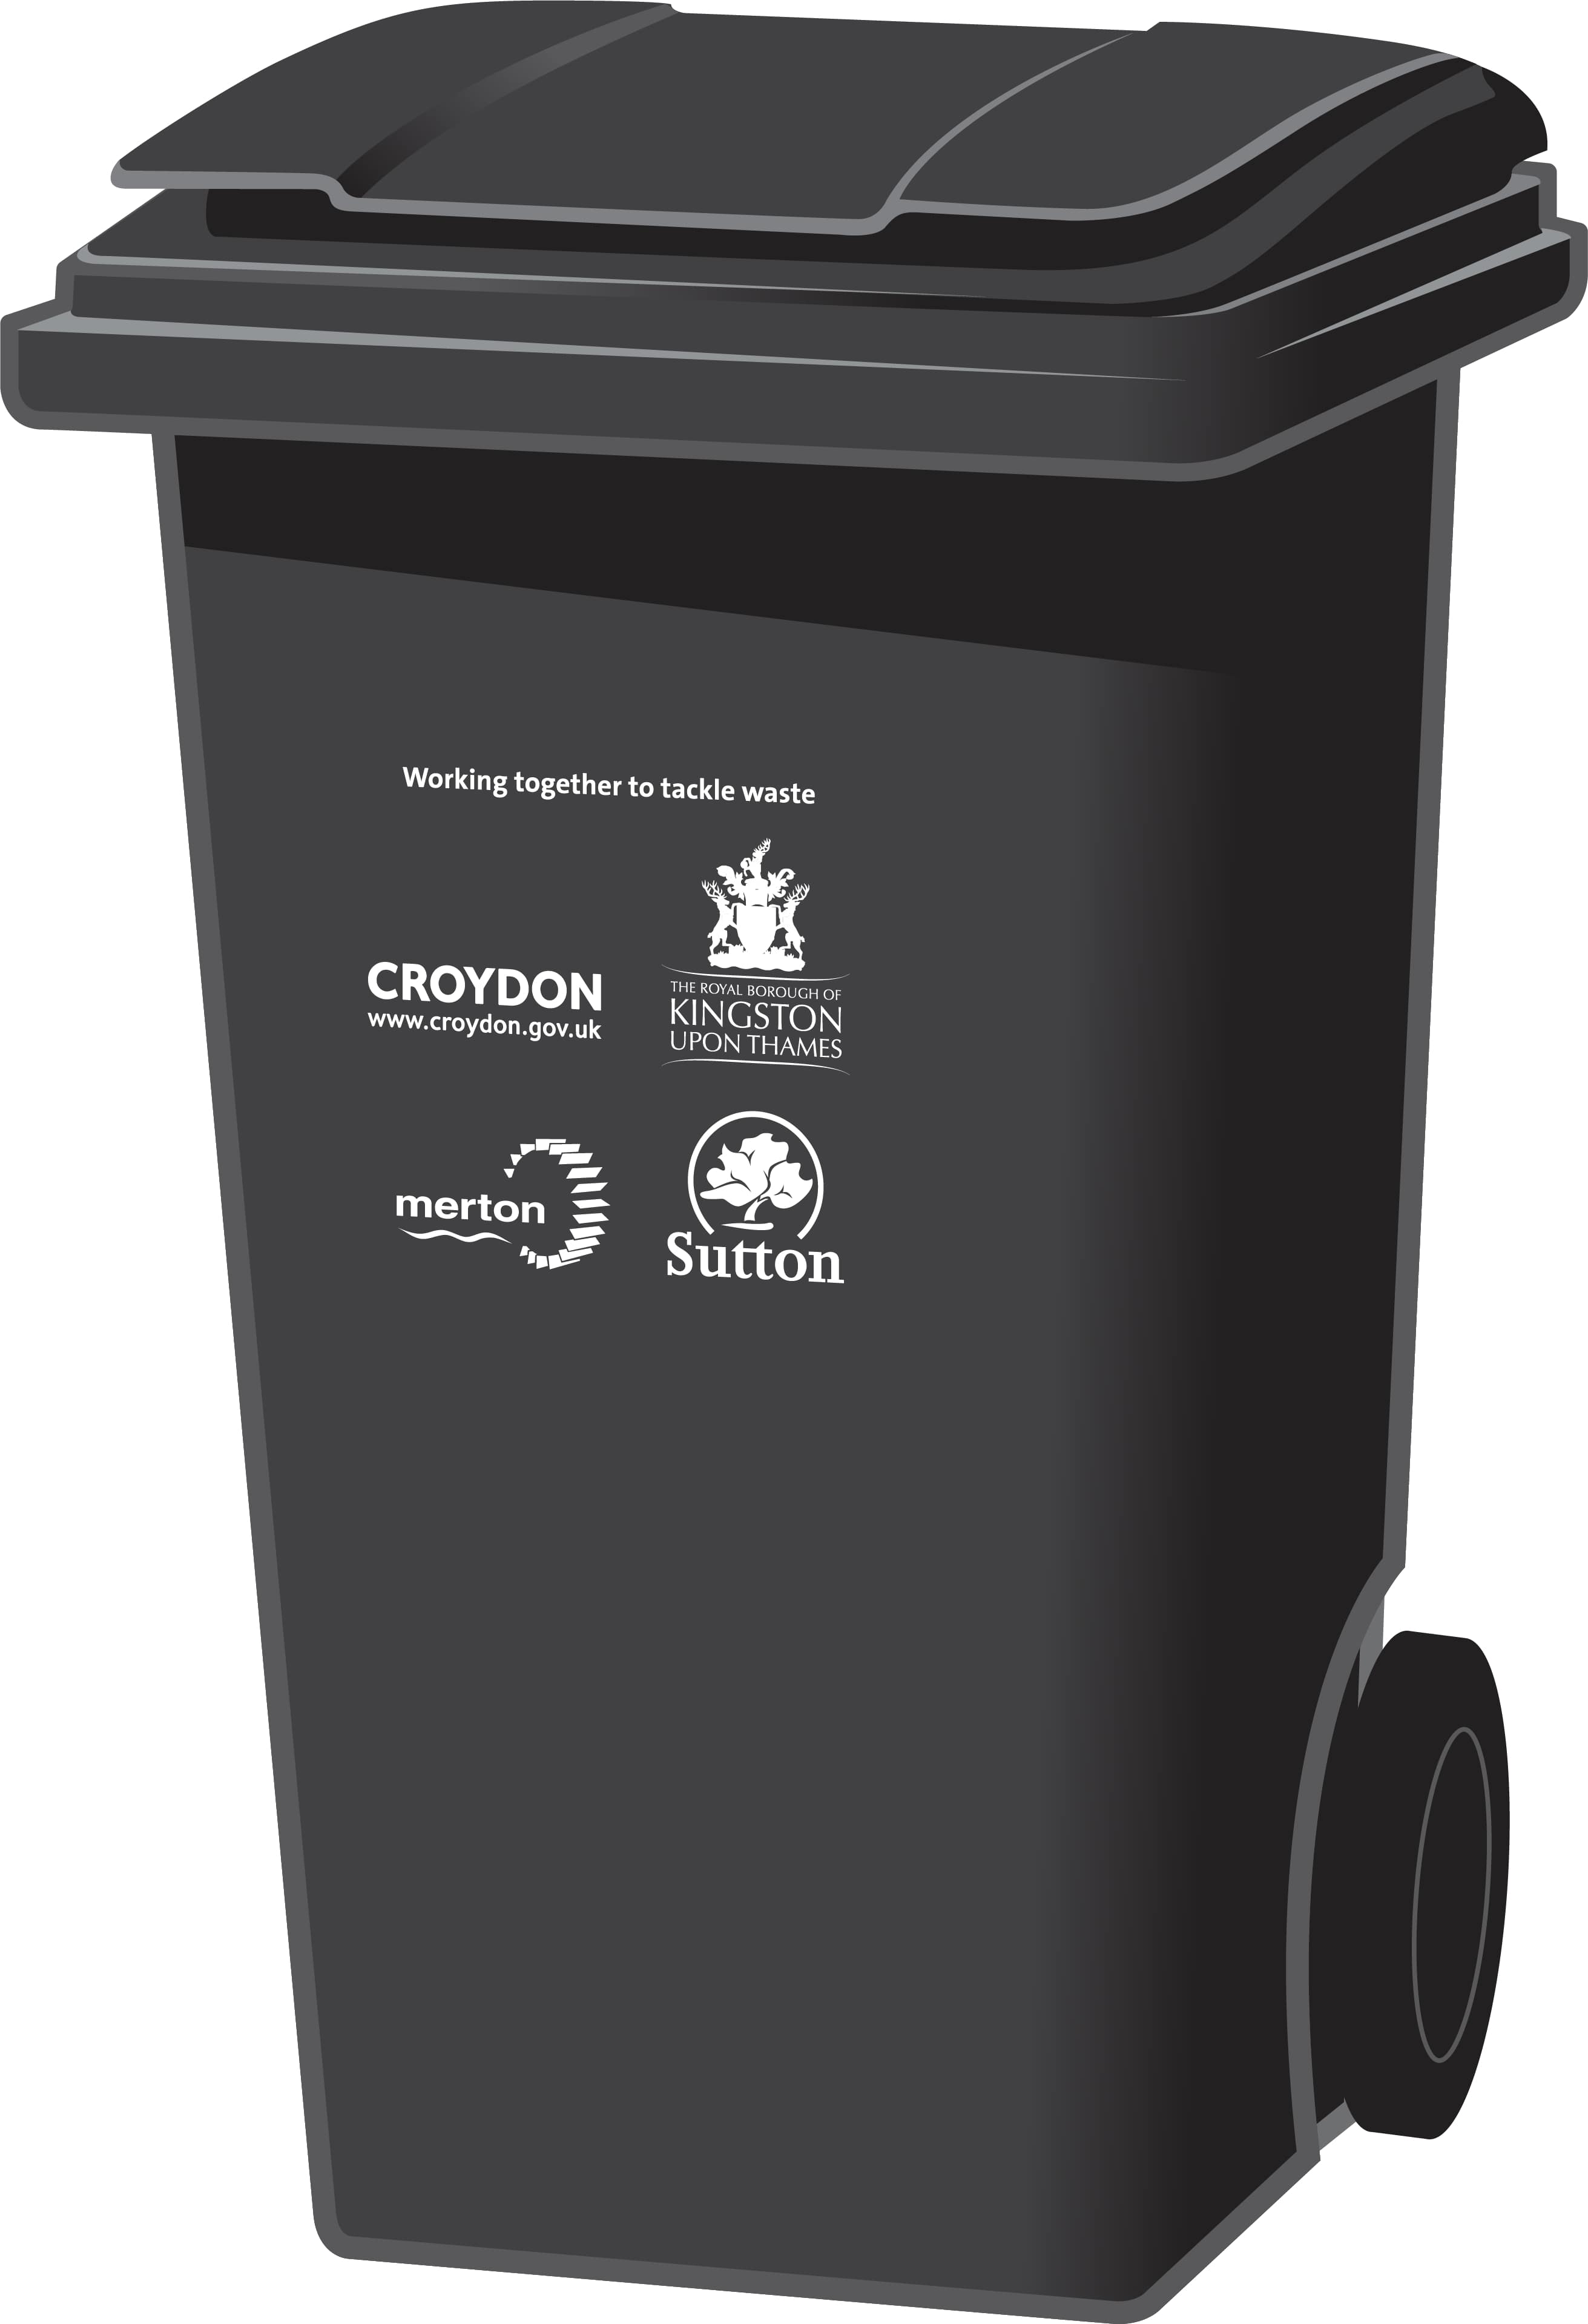 Black wheelie rubbish bin with South London Waste Partnership logos on it.